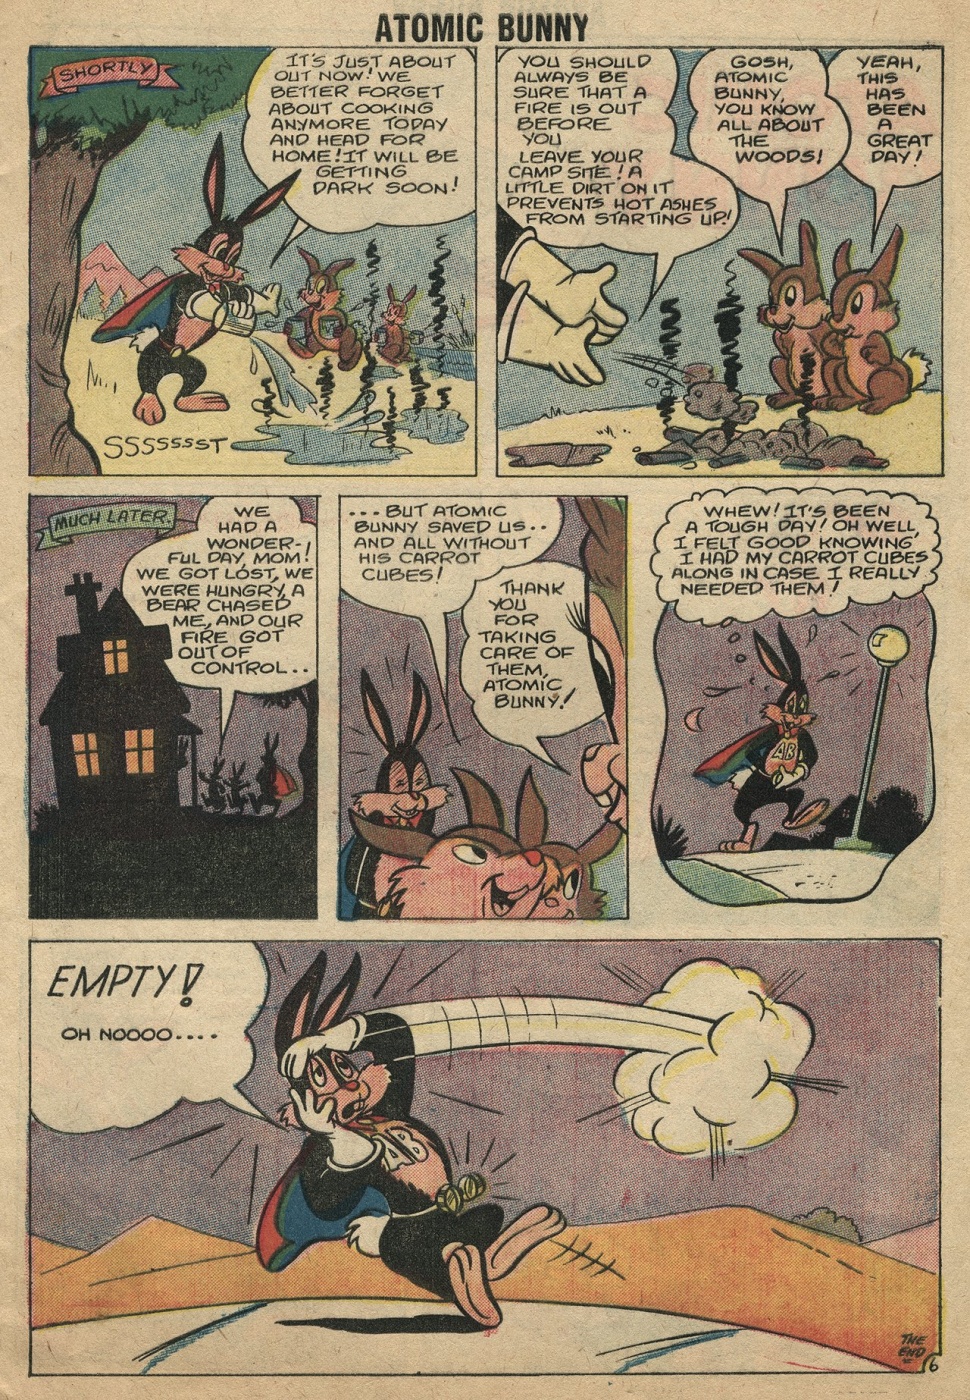 Atomic-Bunny-Comic-Strips (9)